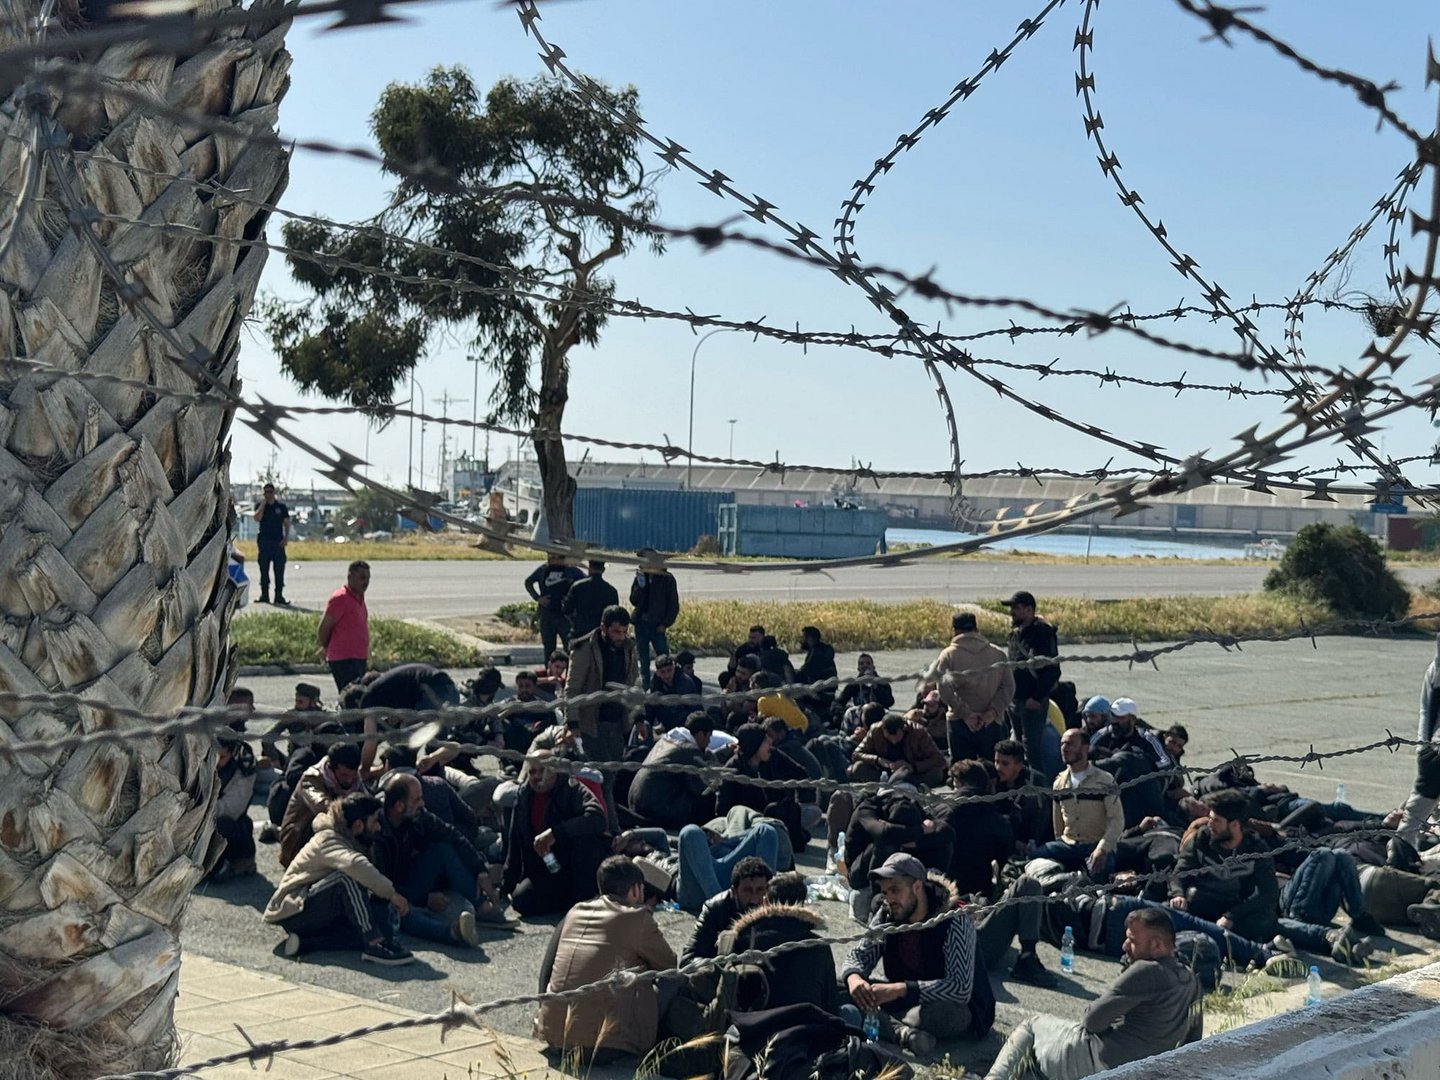 image Cyprus has repatriated 4,491 migrants so far this year